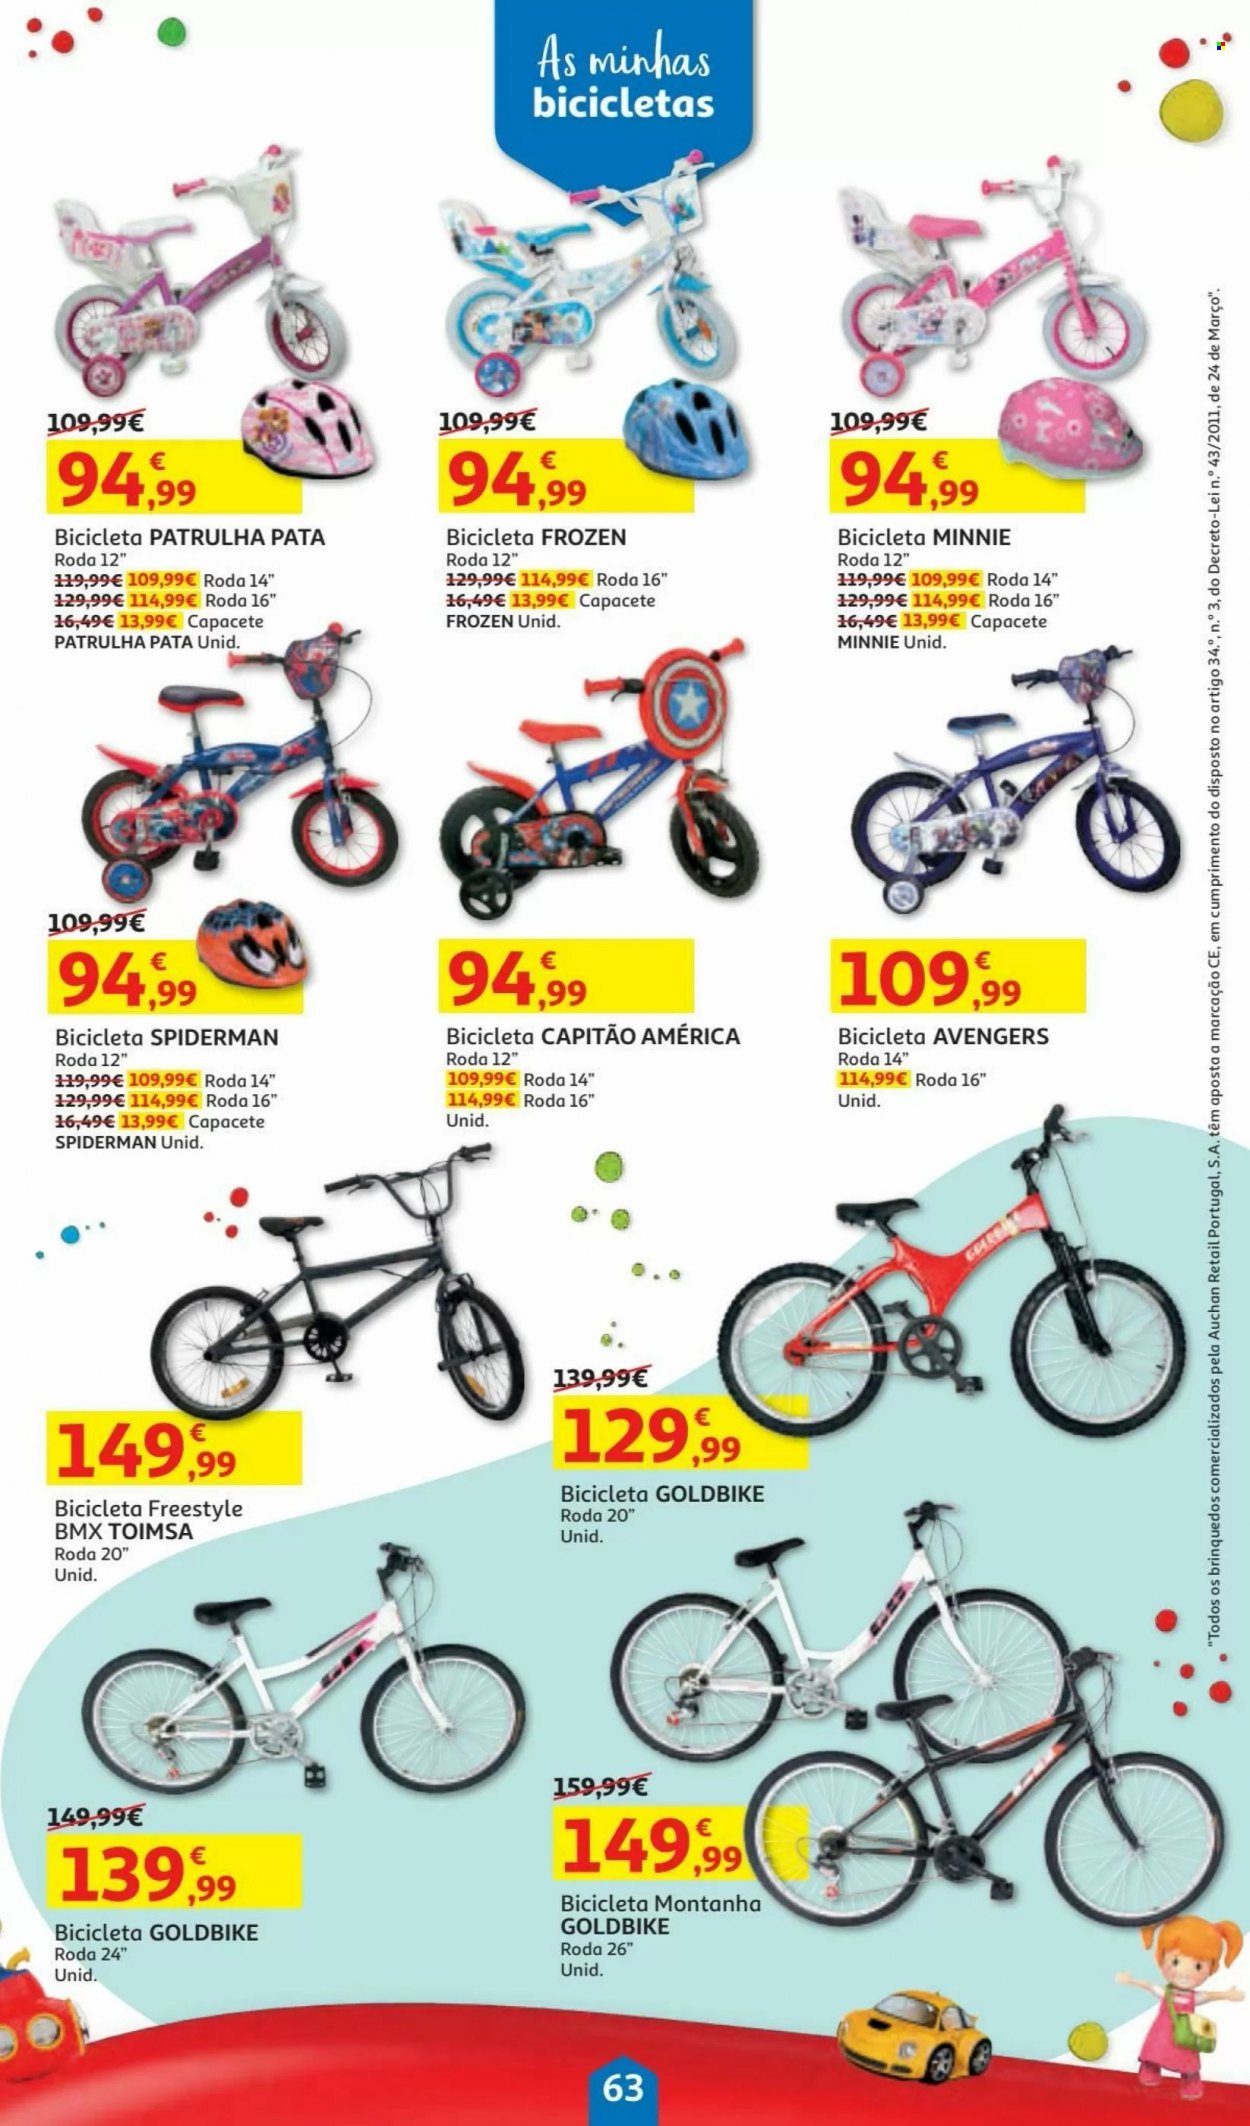 thumbnail - Folheto Auchan - 5.11.2021 - 24.12.2021 - Produtos em promoção - Avengers, Frozen, Spiderman, Minnie, bicicleta, capacete. Página 63.